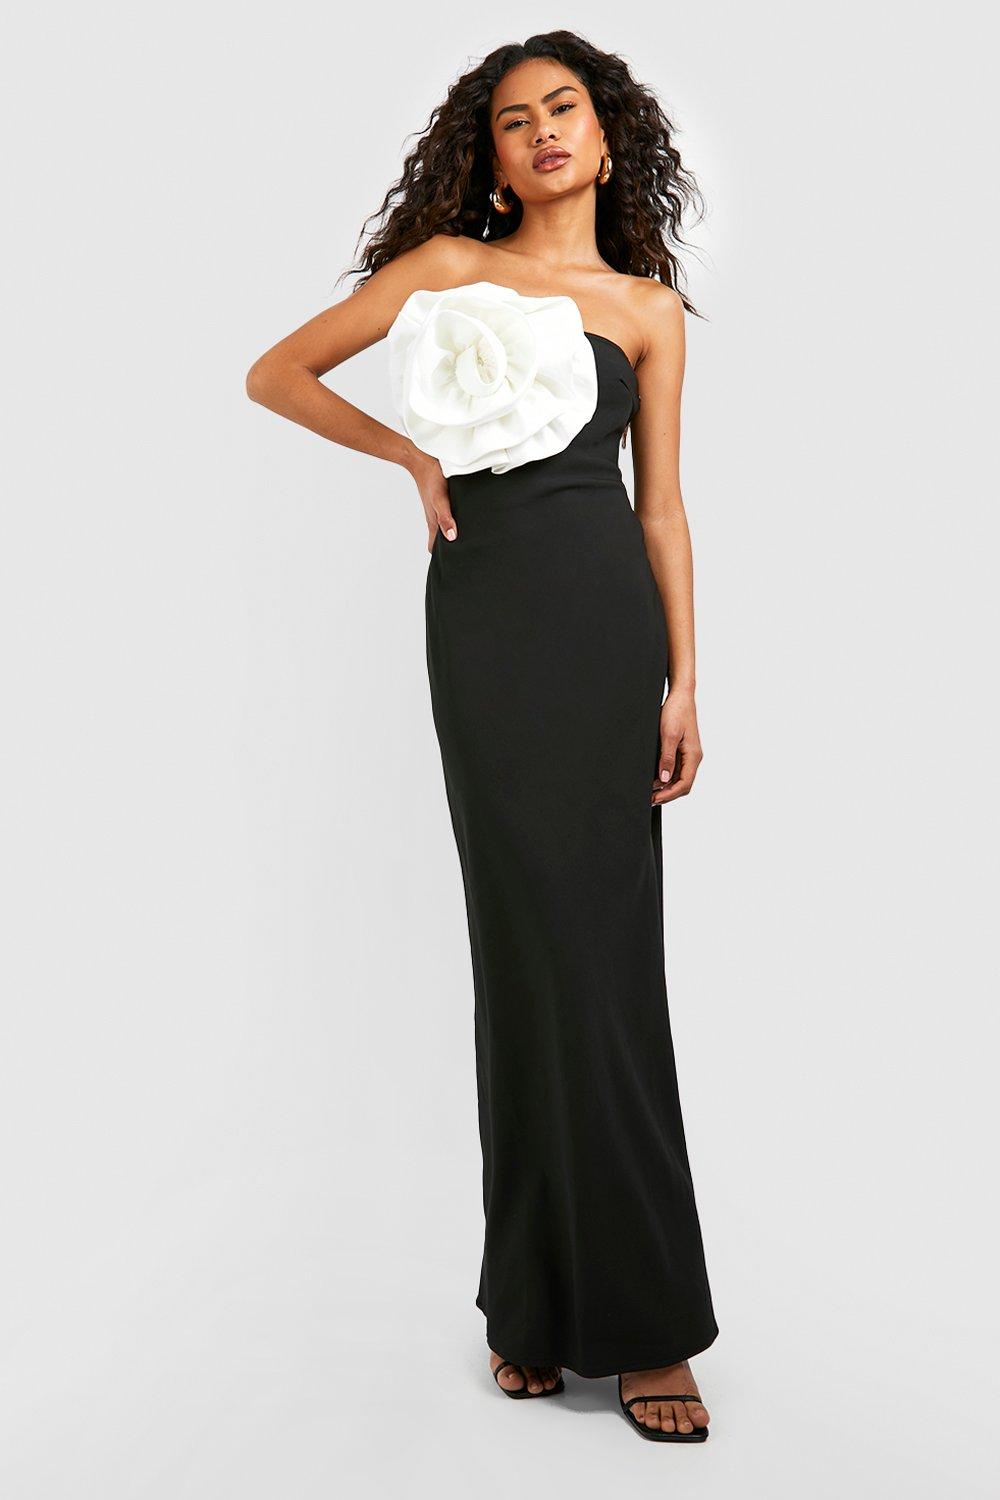 80s Prom Dresses – Party, Cocktail, Bridesmaid, Formal Womens Rose Detail Bandeau Maxi Dress - Black - 14 $55.00 AT vintagedancer.com